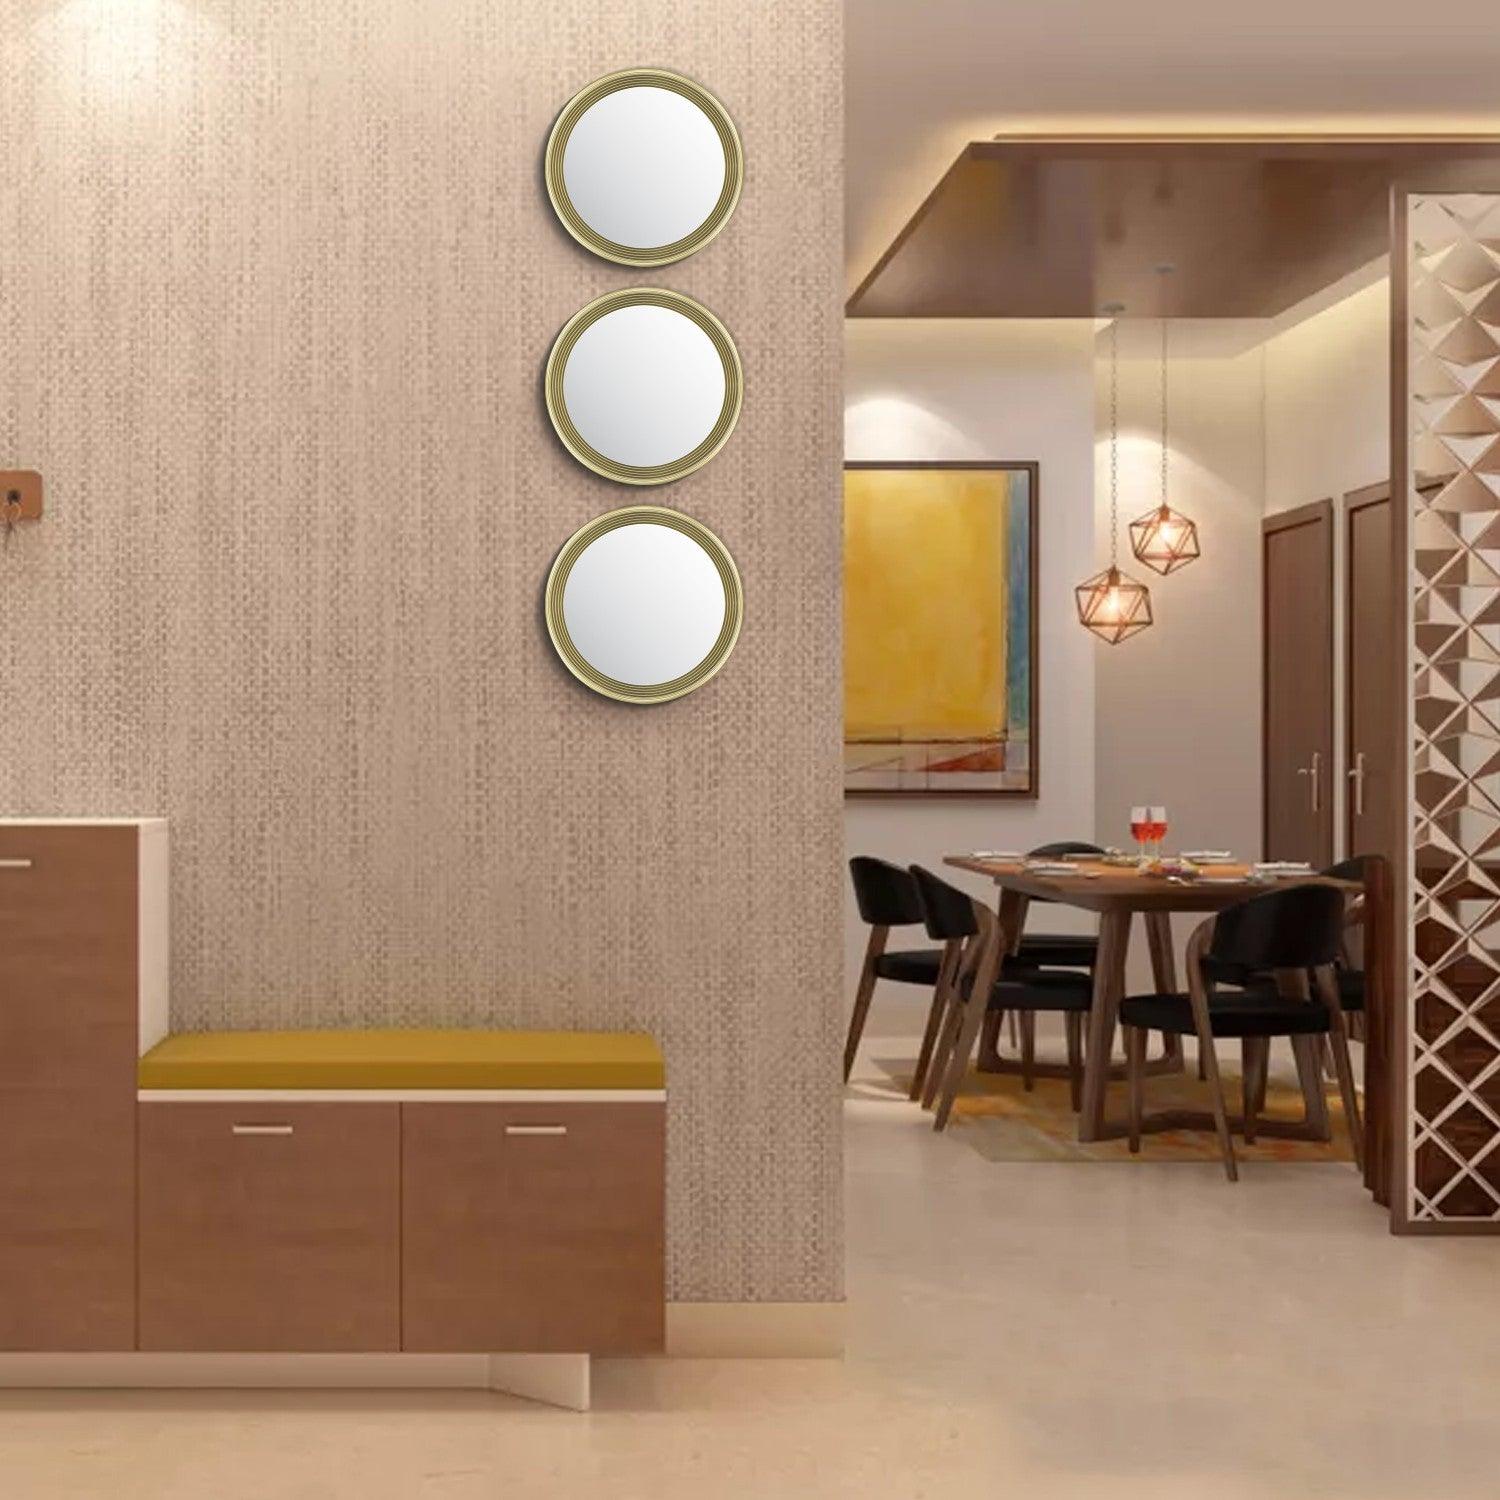 Market99 Wall Mirror, Wall Décor, Champagne Colour, Plastic, Set